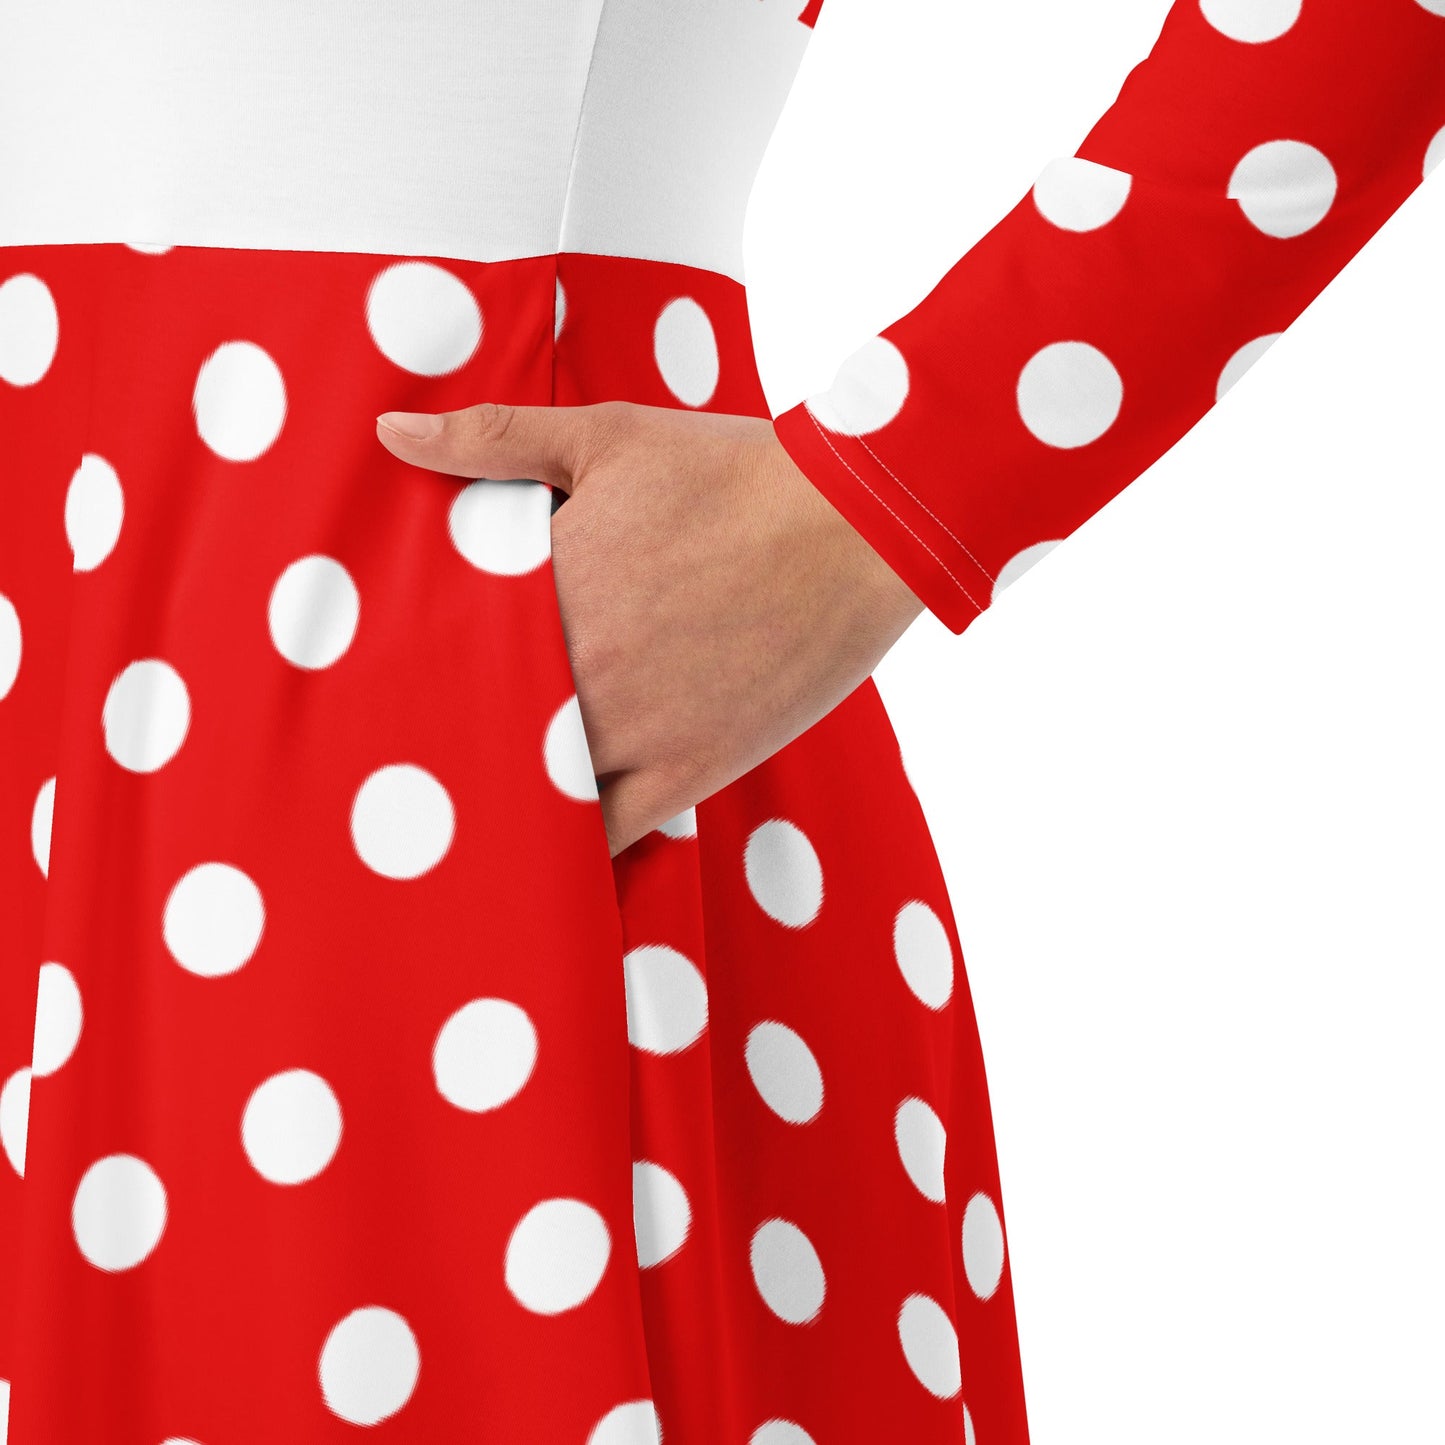 Mrs. Mouse long sleeve midi dress adult disneyadult disney dressadult minnie costume#tag4##tag5##tag6#